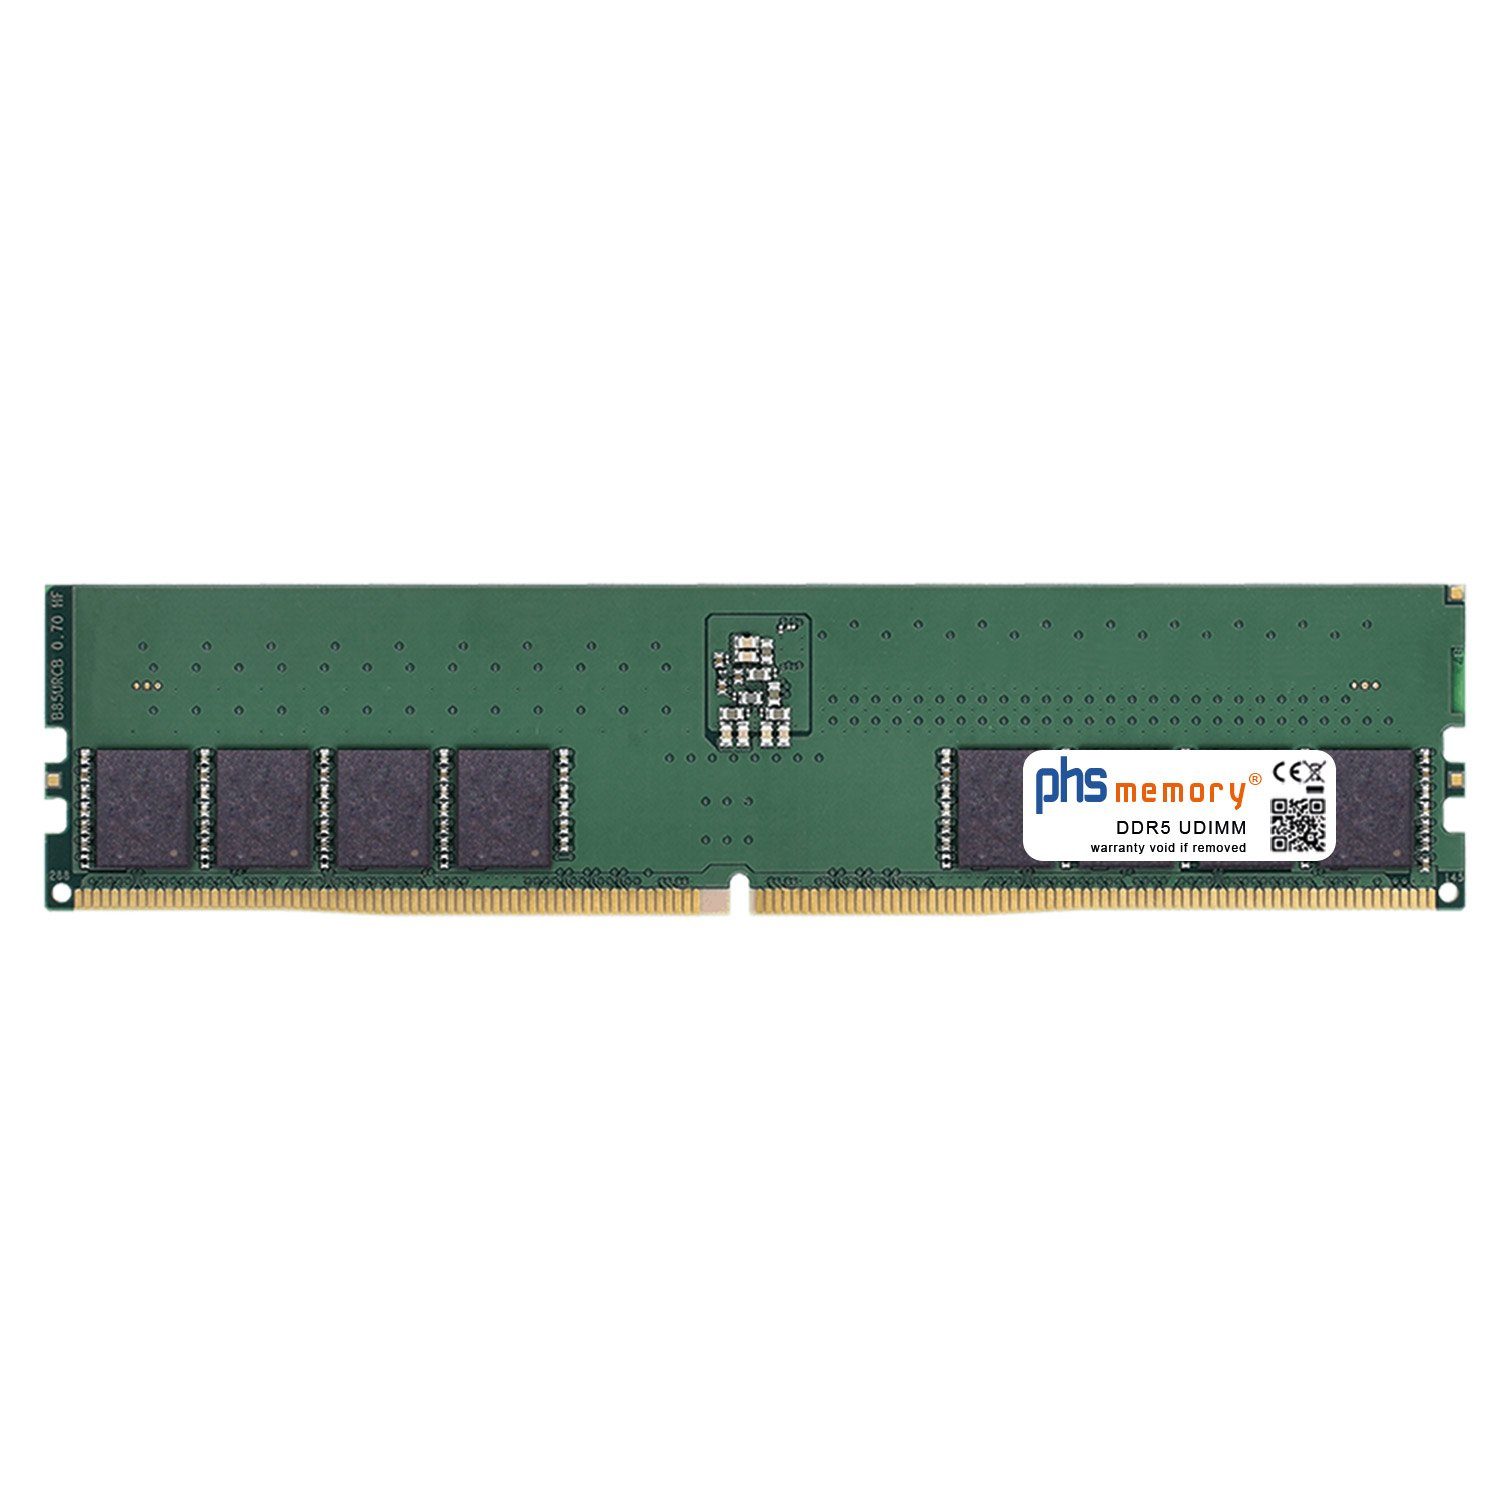 PHS-memory RAM für Captiva Highend Gaming I67-415 Arbeitsspeicher